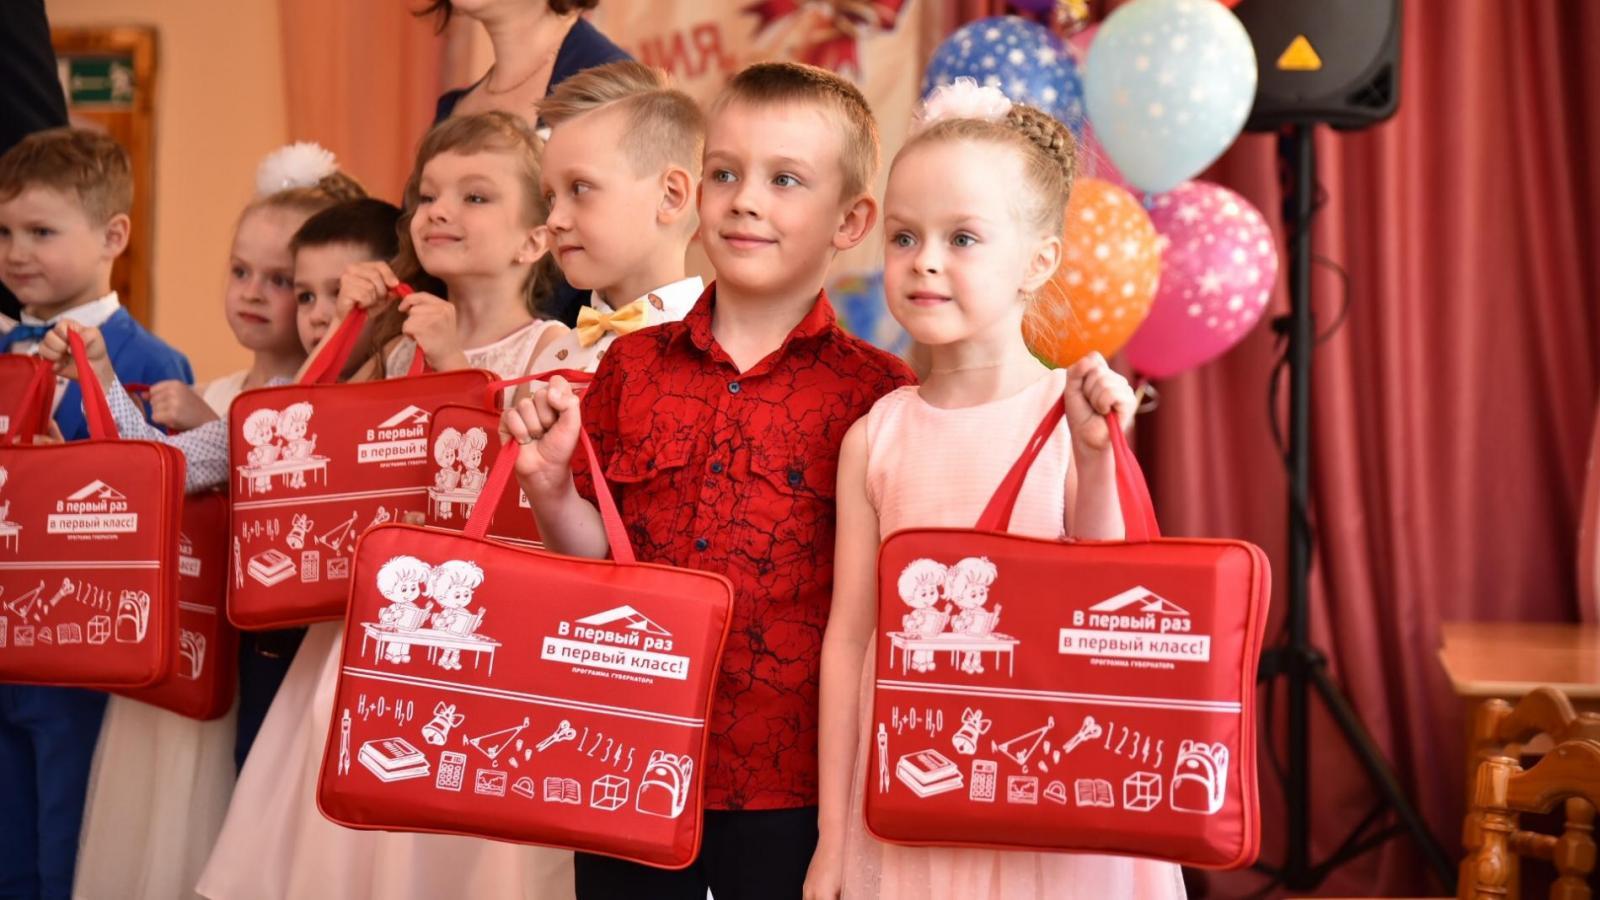 11 млн. руб. потратят на подарки первоклассникам